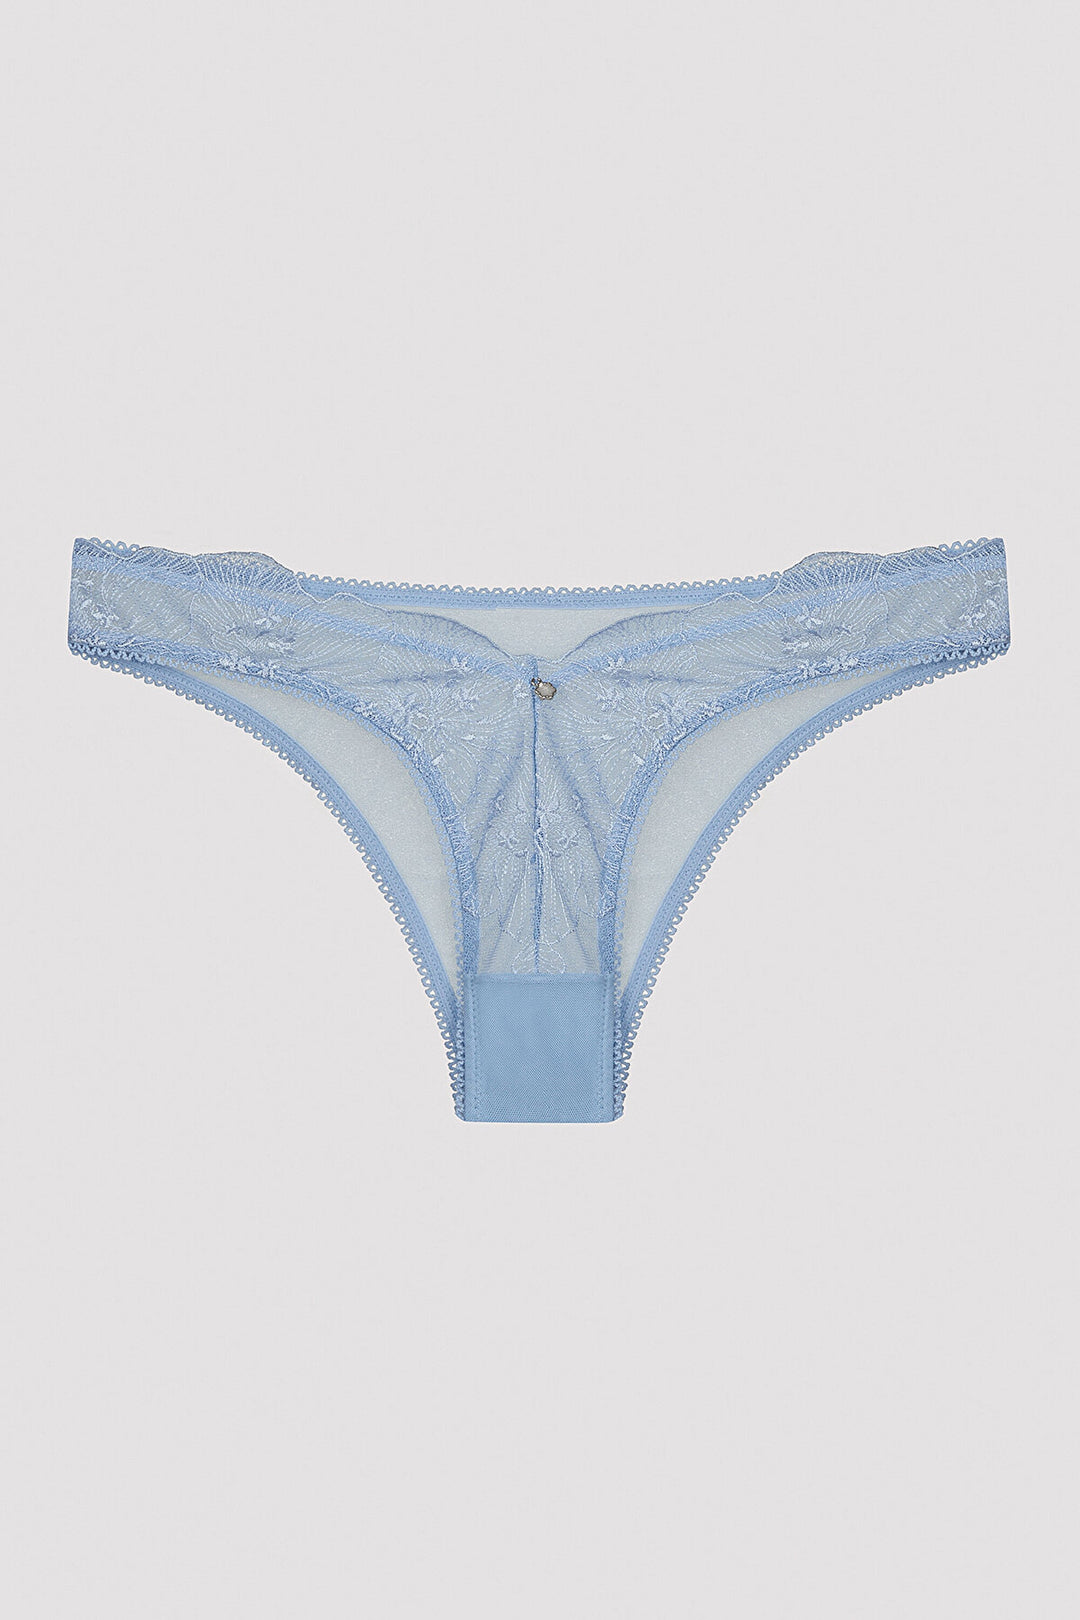 Shiny Lace V-Cut Brazilian Panties